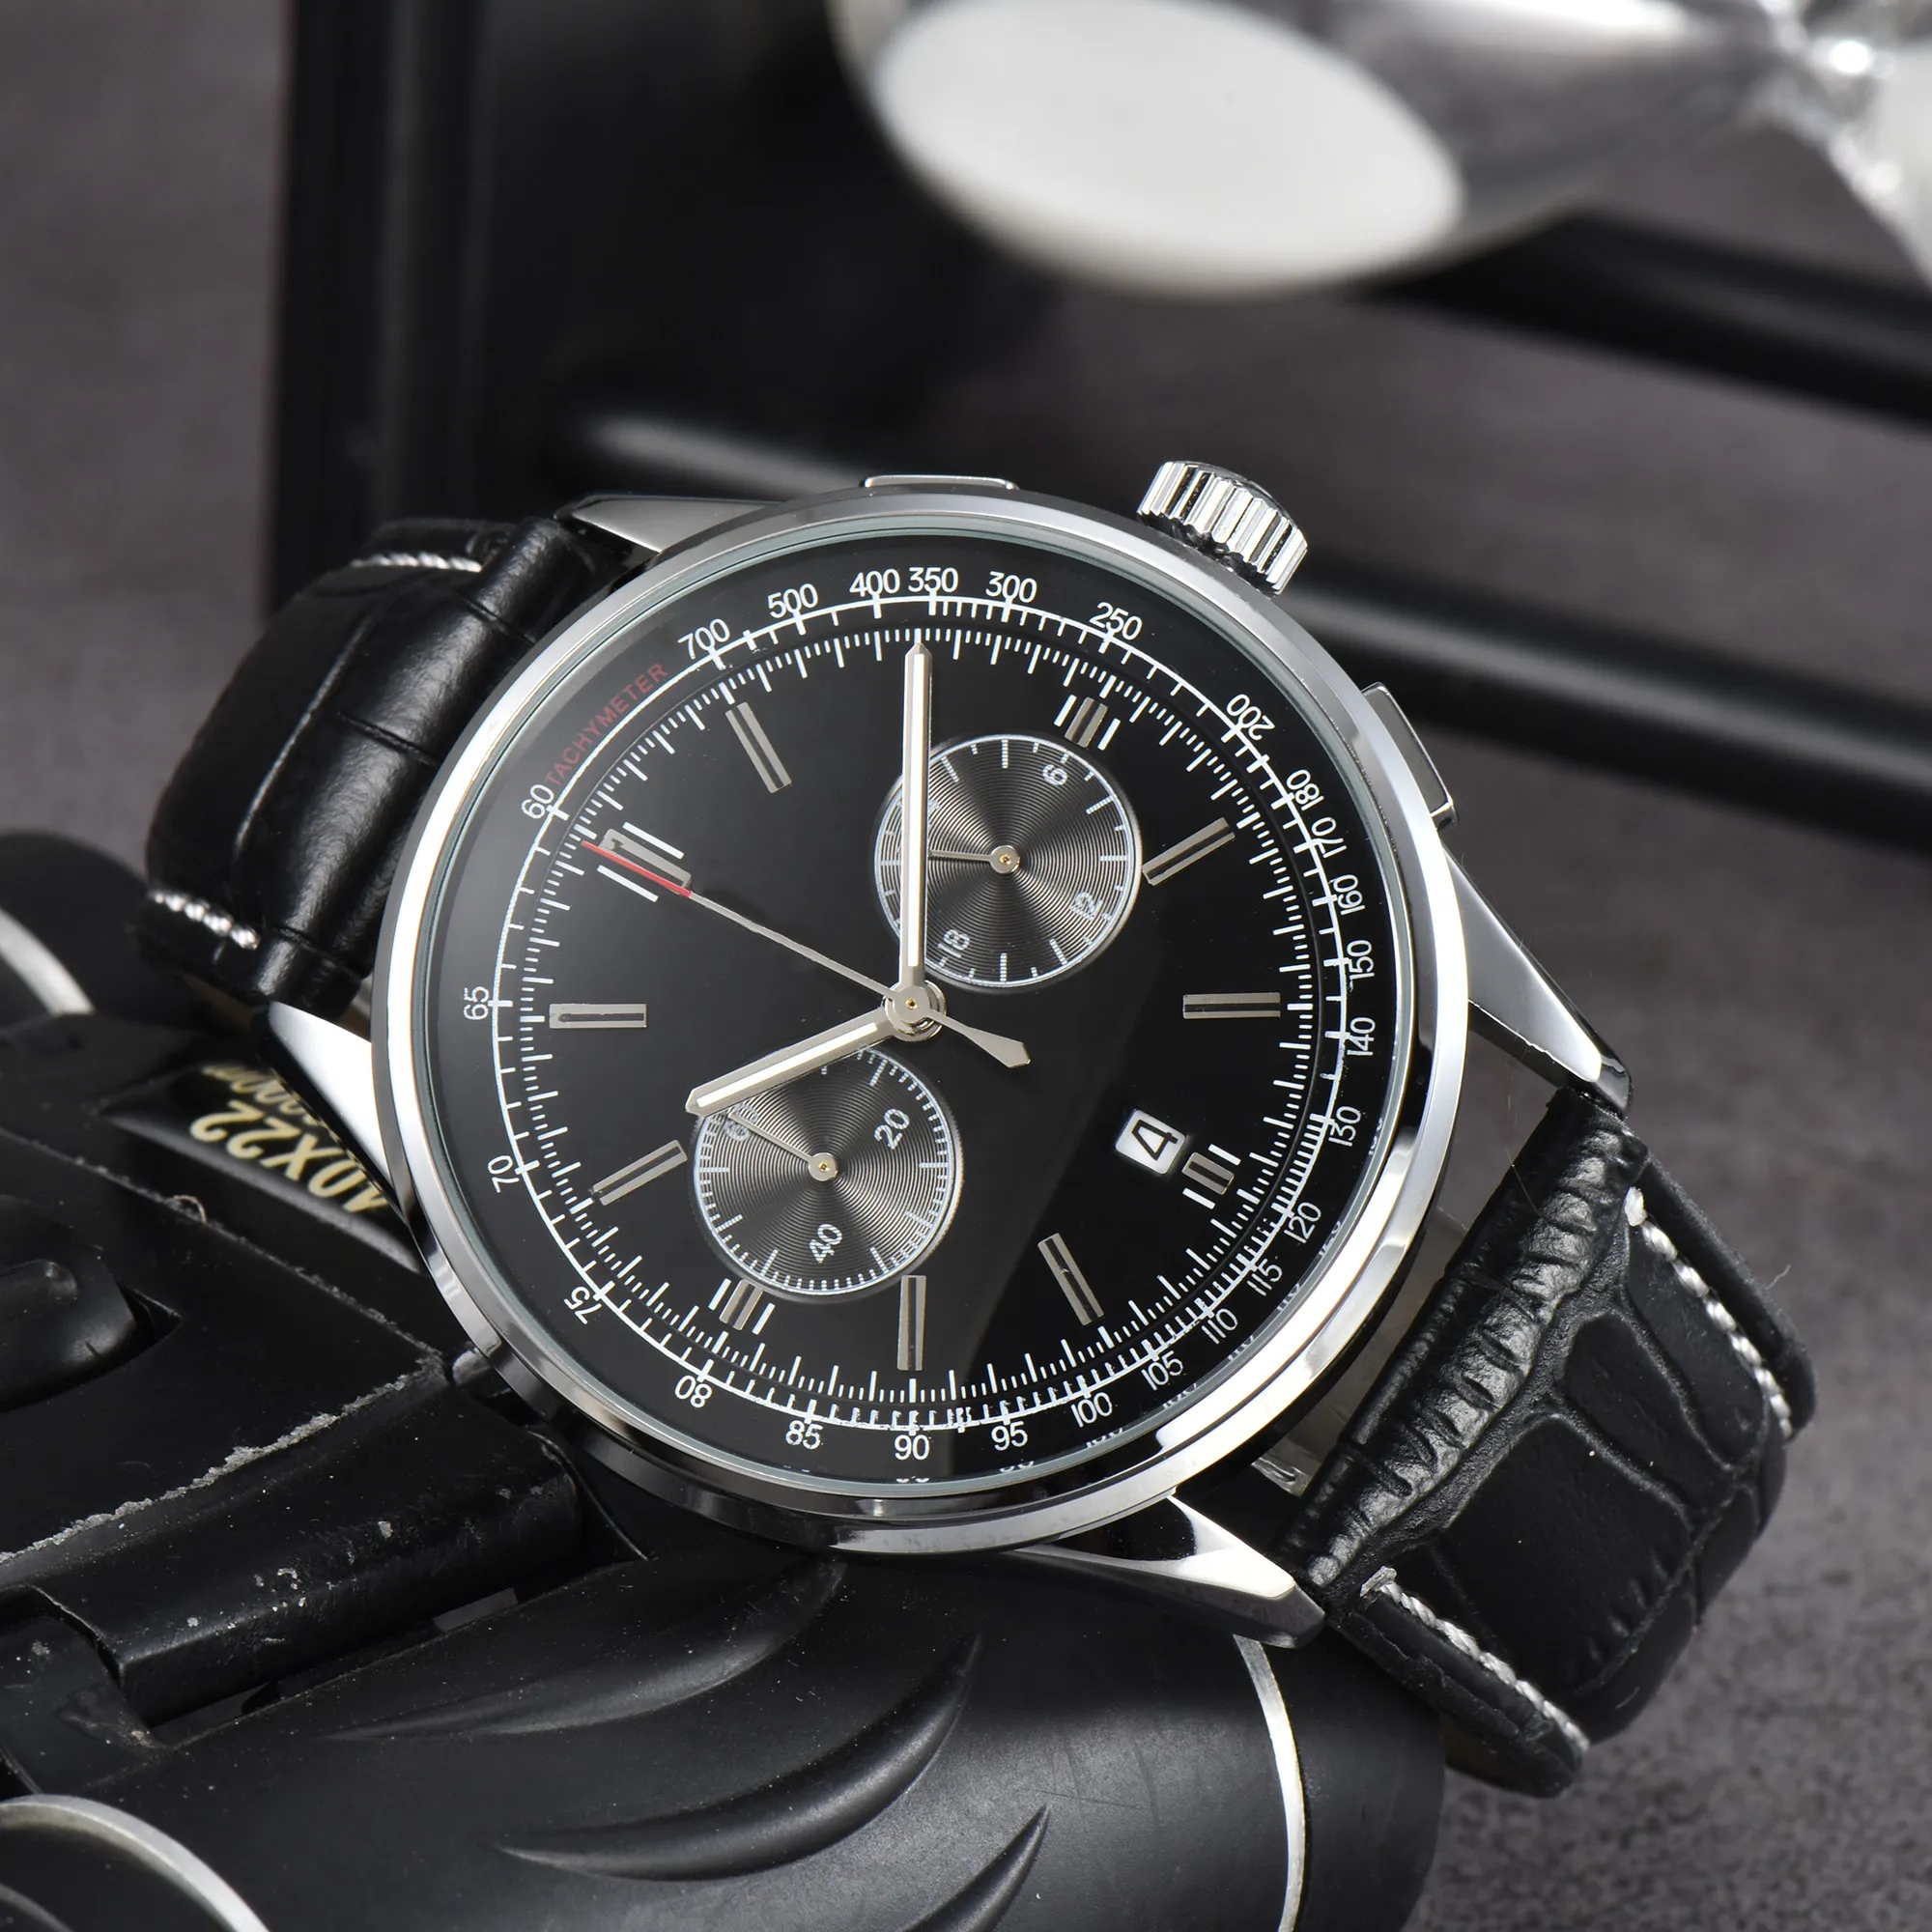 Marca de moda relógios de pulso relógios masculinos qualidade quartzo movimento relógio de pulso de luxo pulseira de aço clássicos relógios pulseira alta presentes